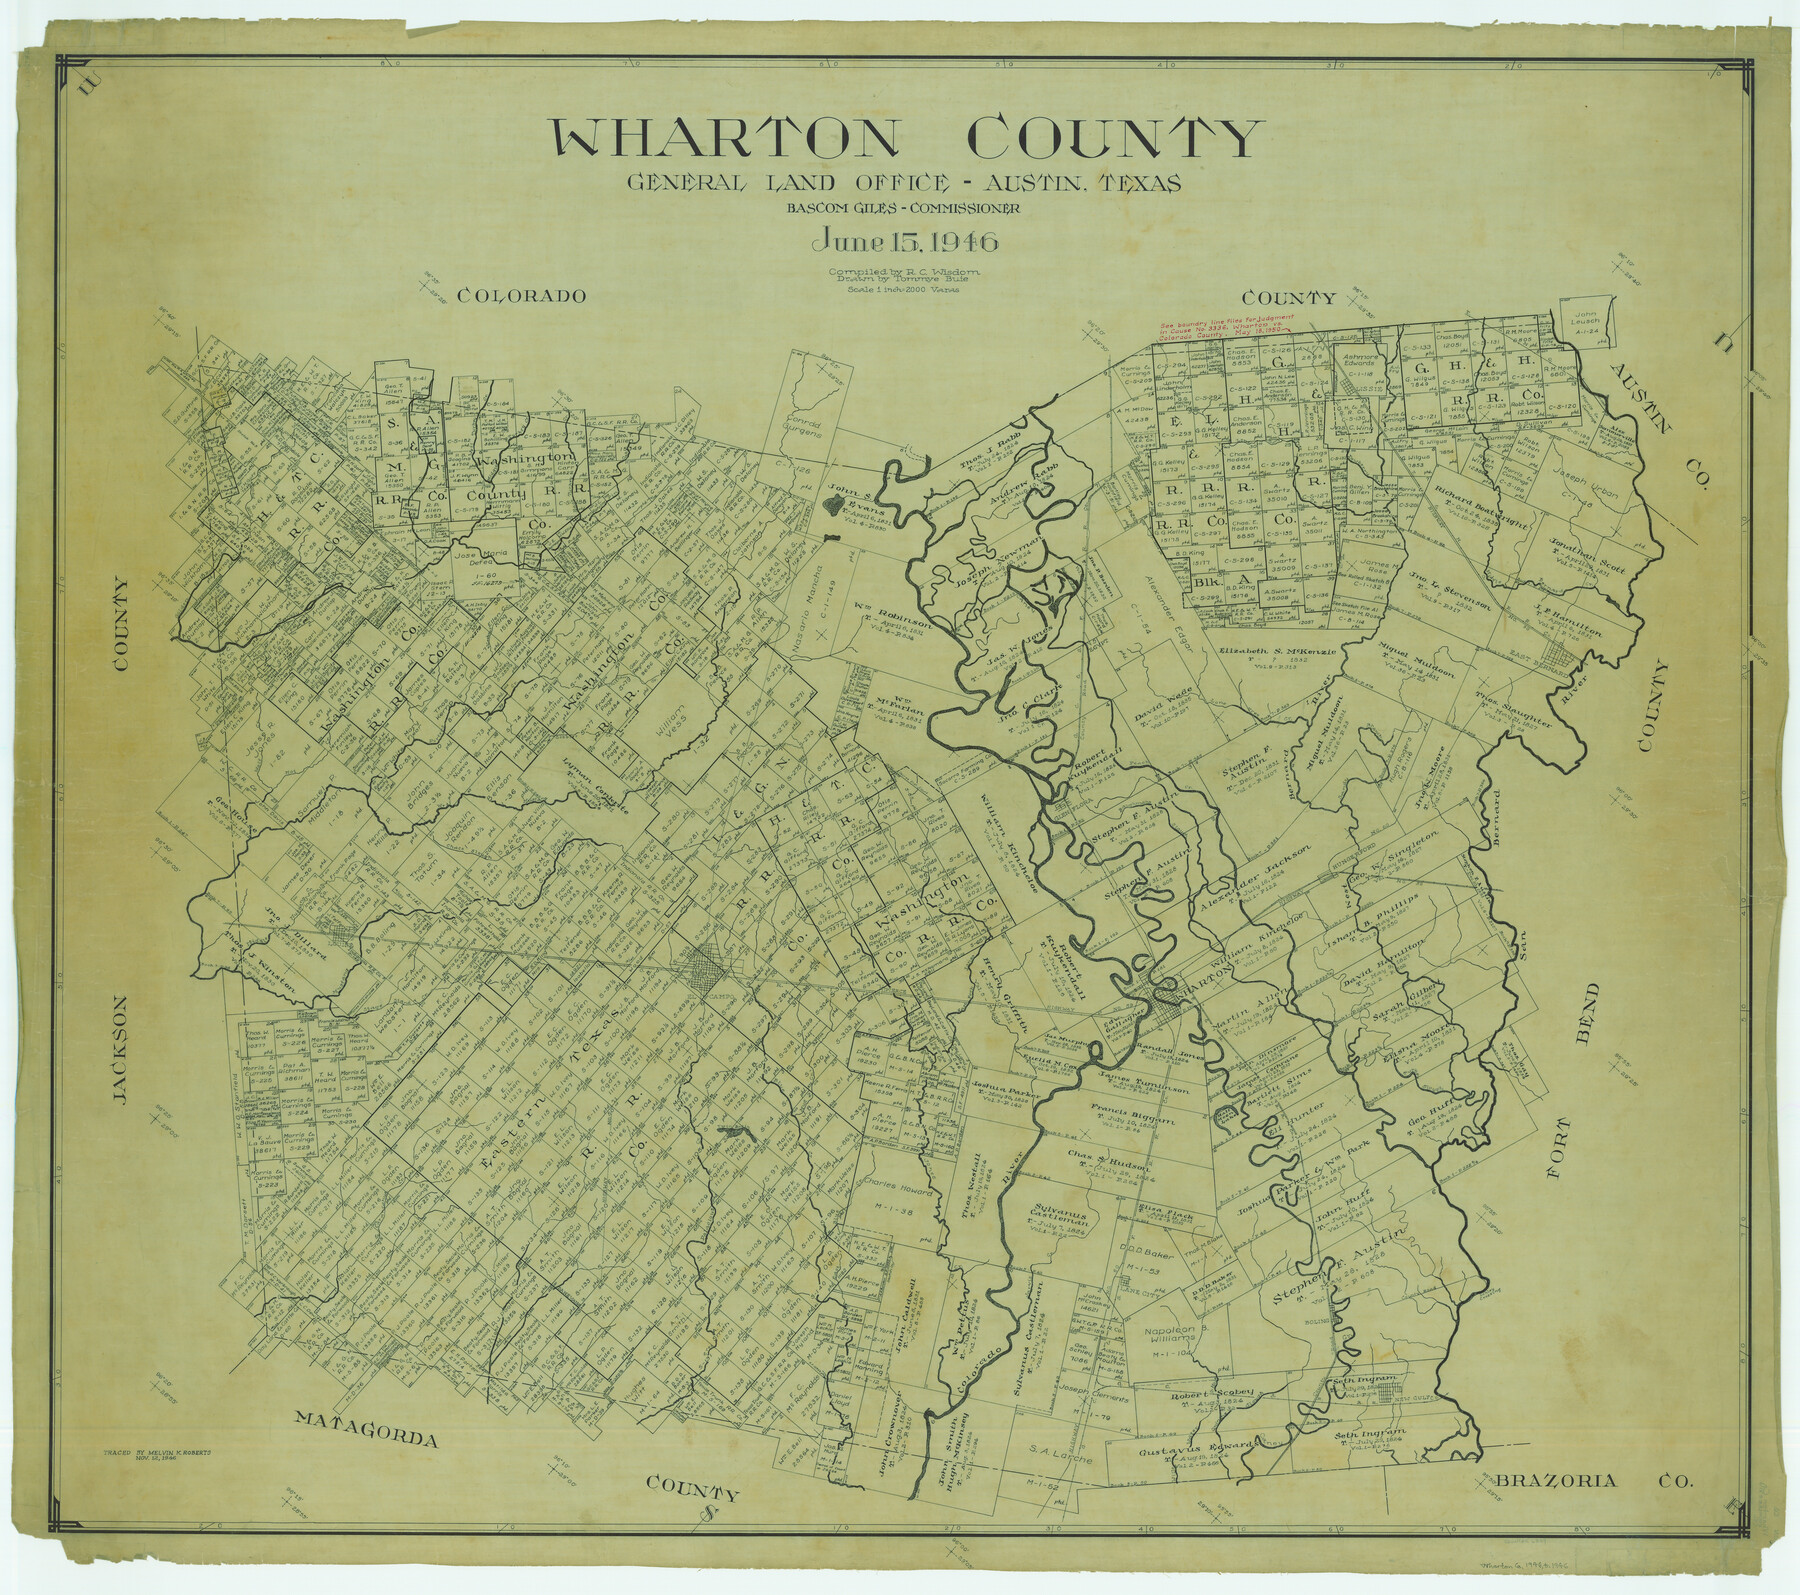 63119, Wharton County, General Map Collection